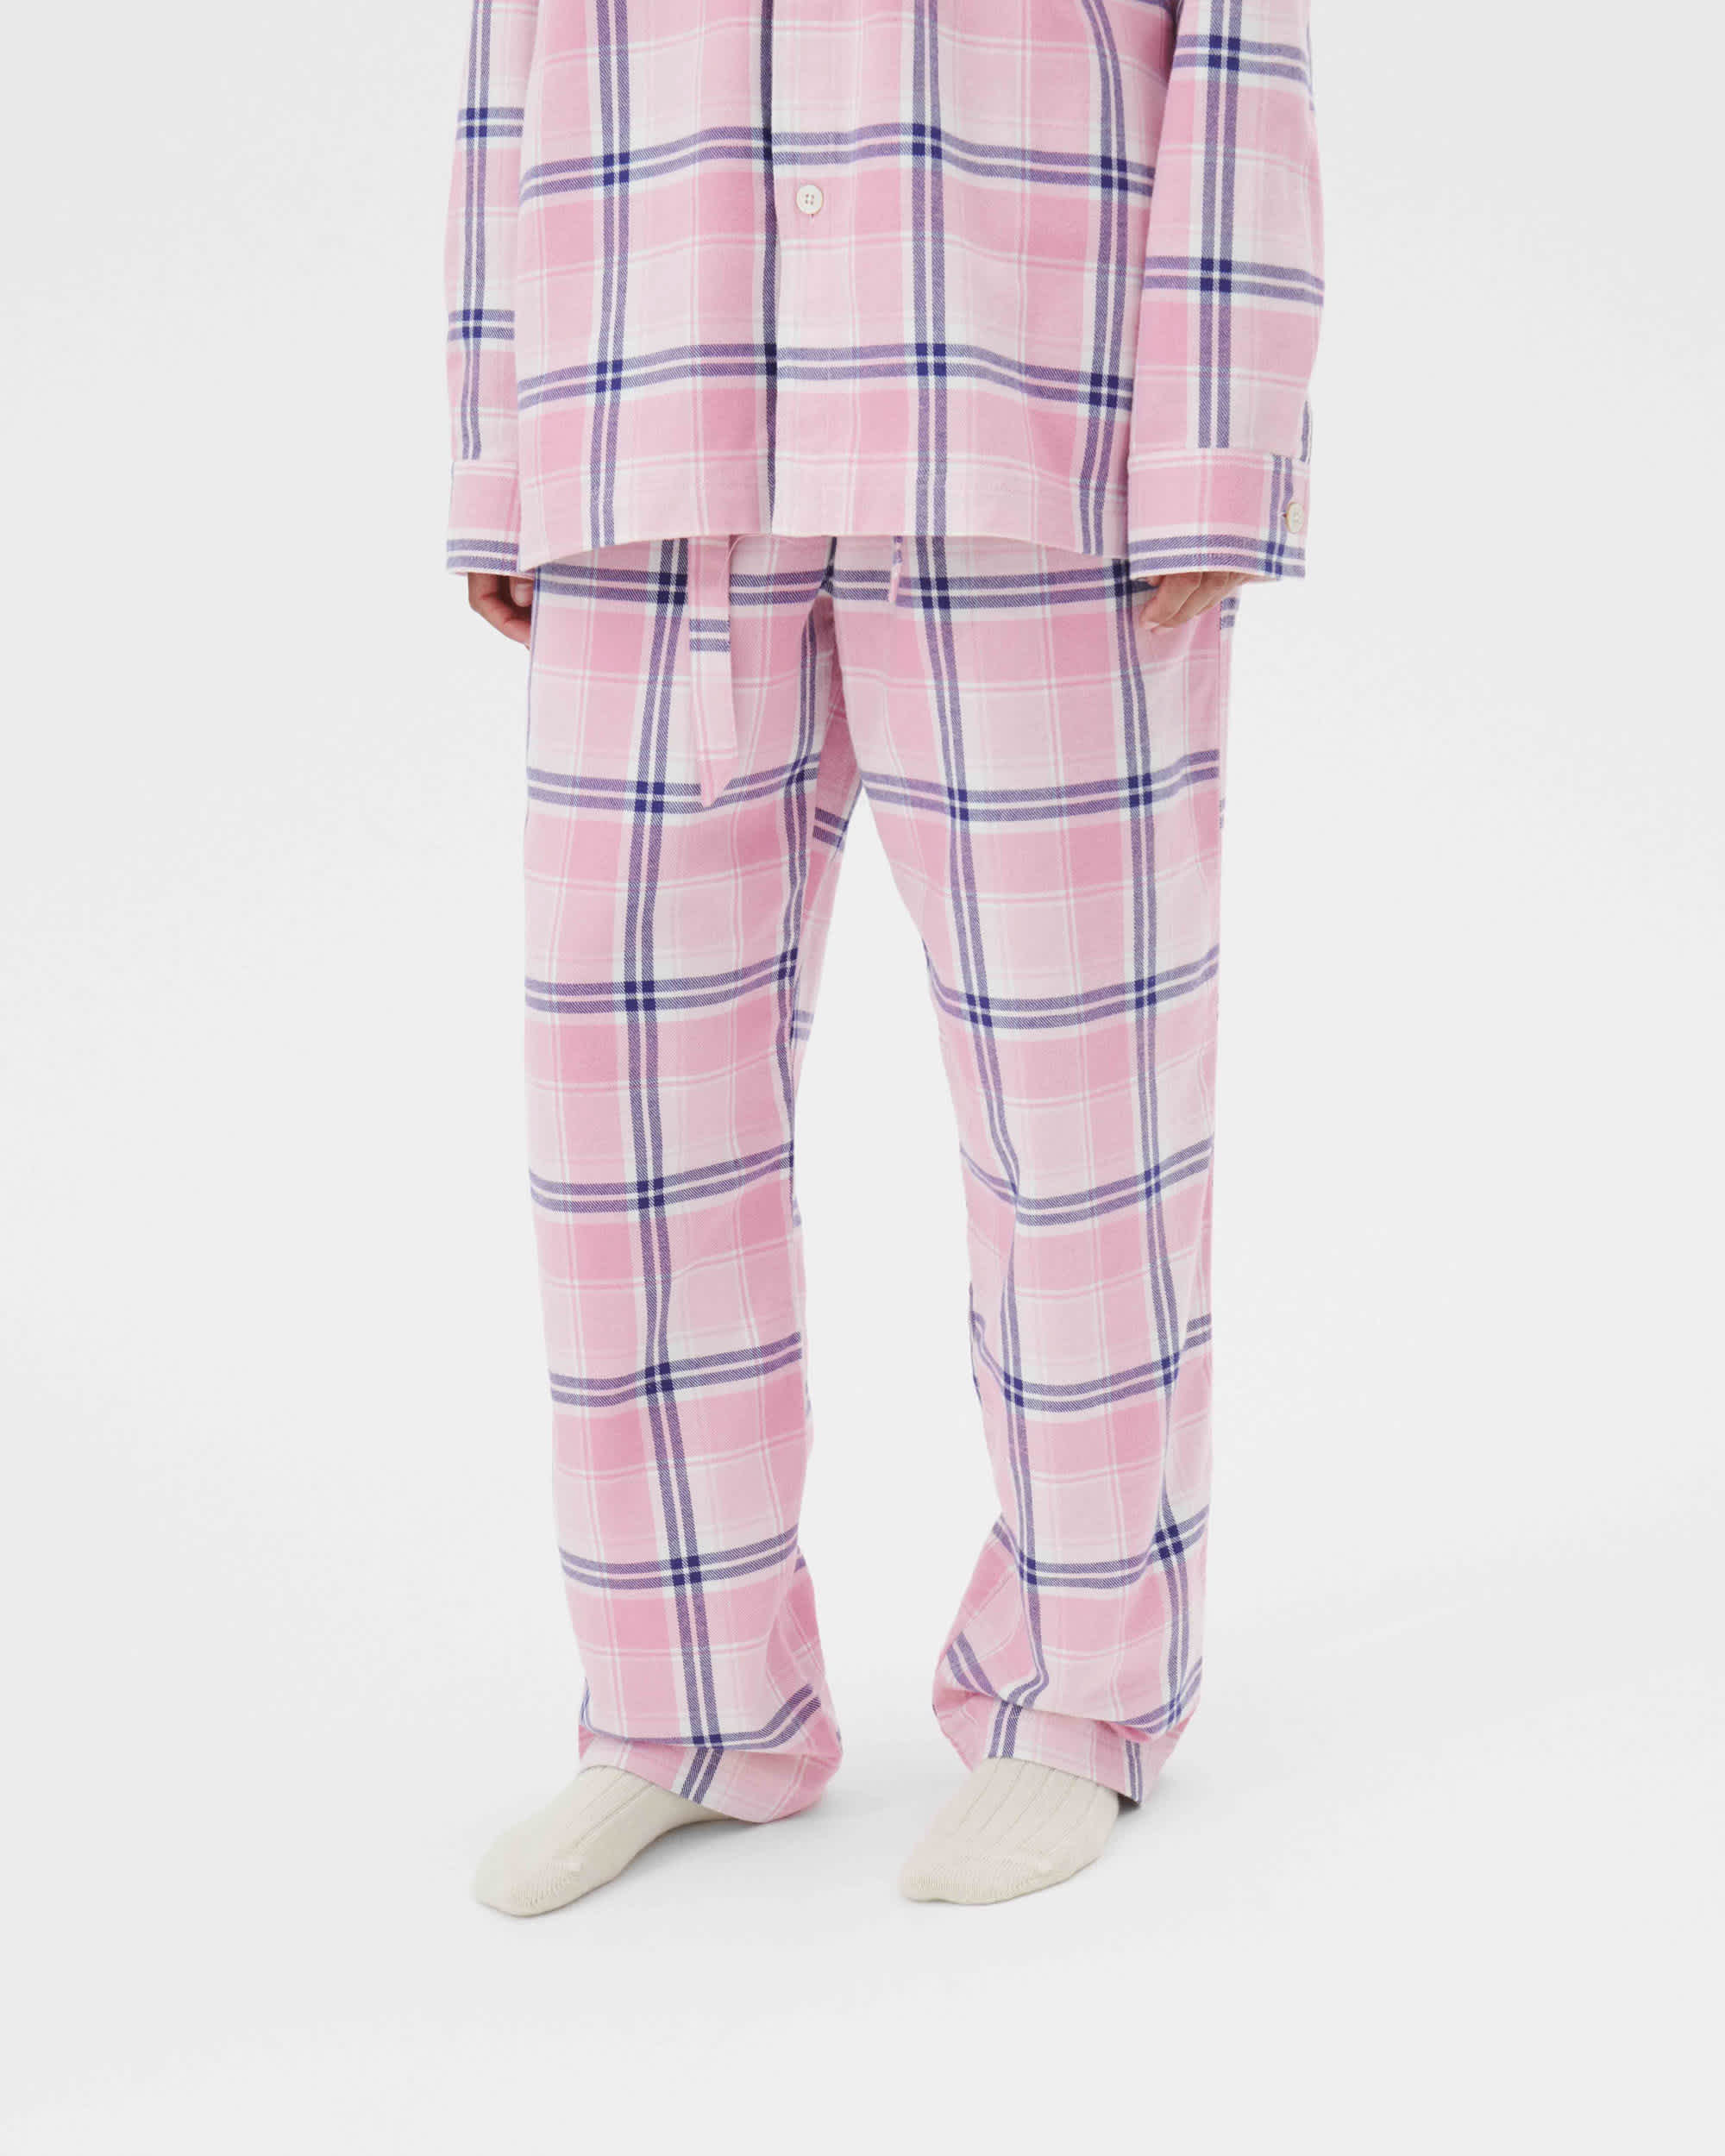 Tekla - Flannel Pyjamas Pants in Dark Blue Plaid – stoy